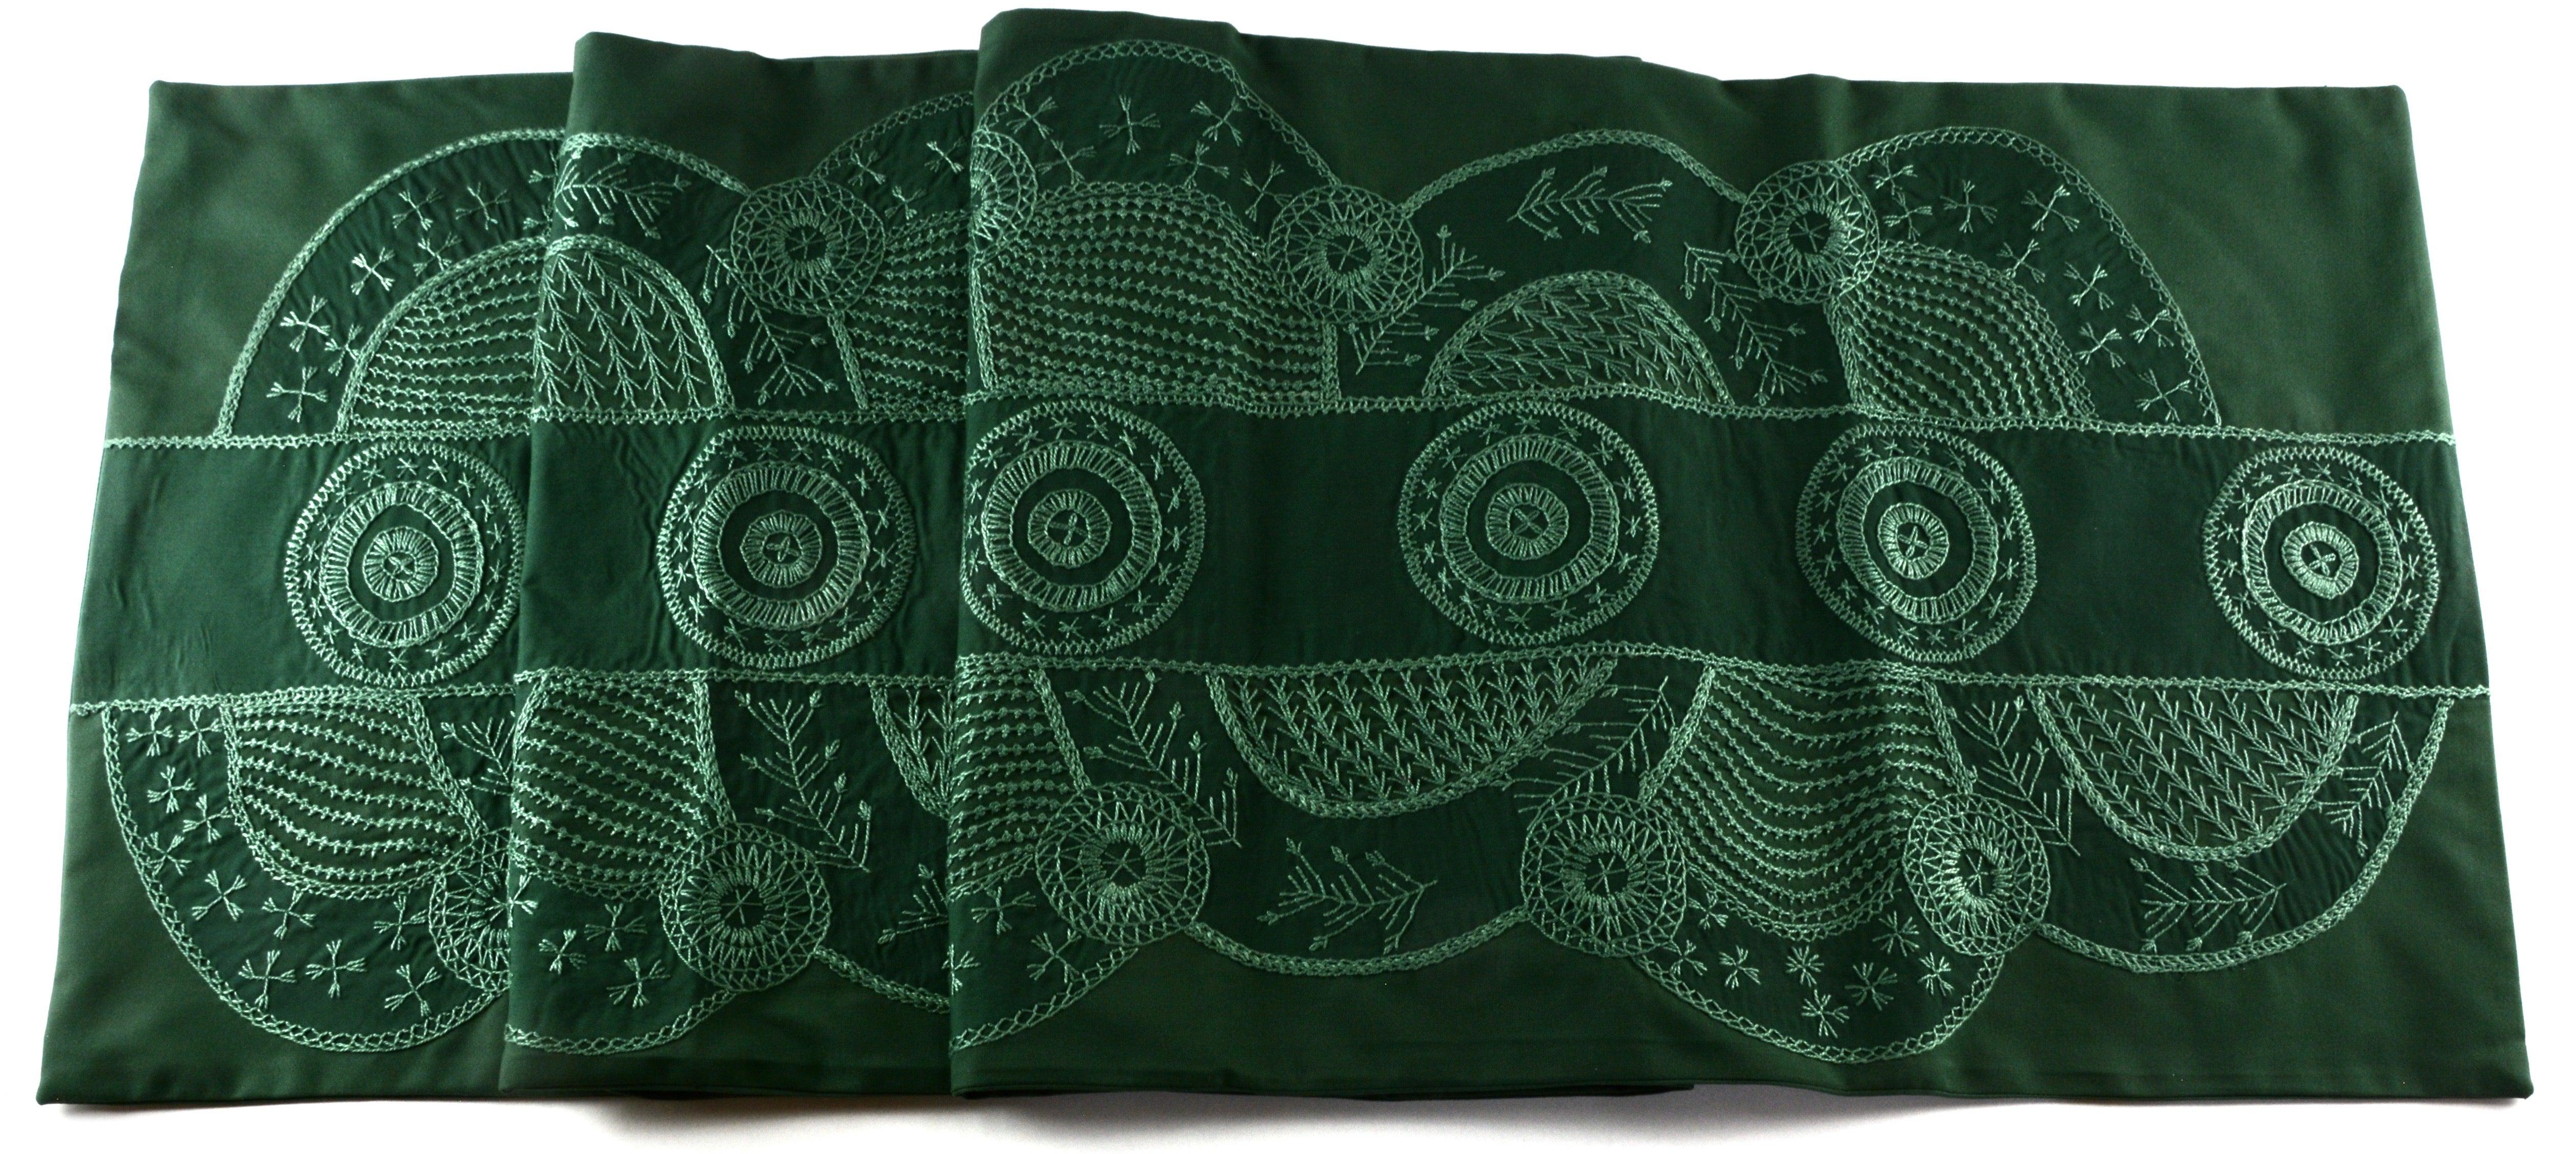 El doce Design Embroidered Table Runner on Green Honduras Threads